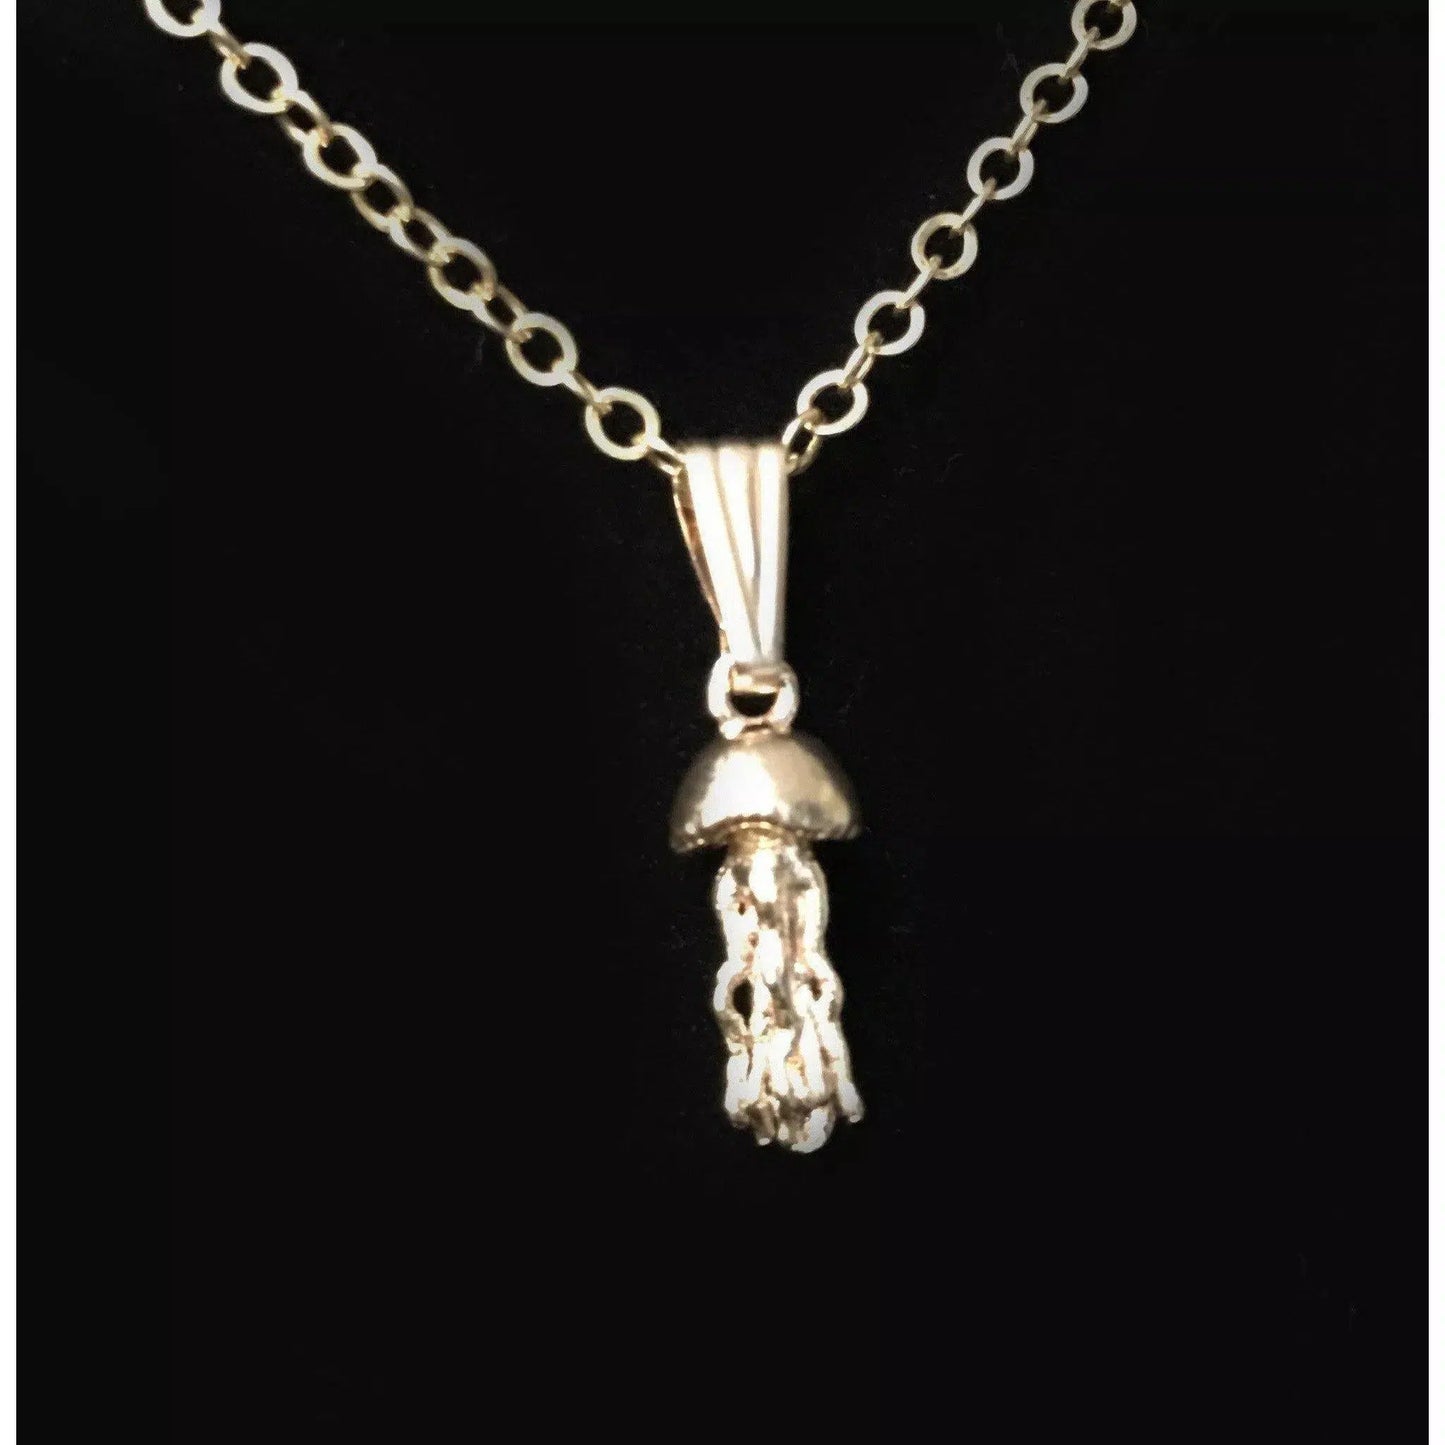 Jellyfish Pendant - Small | Sea Shur Jewelry